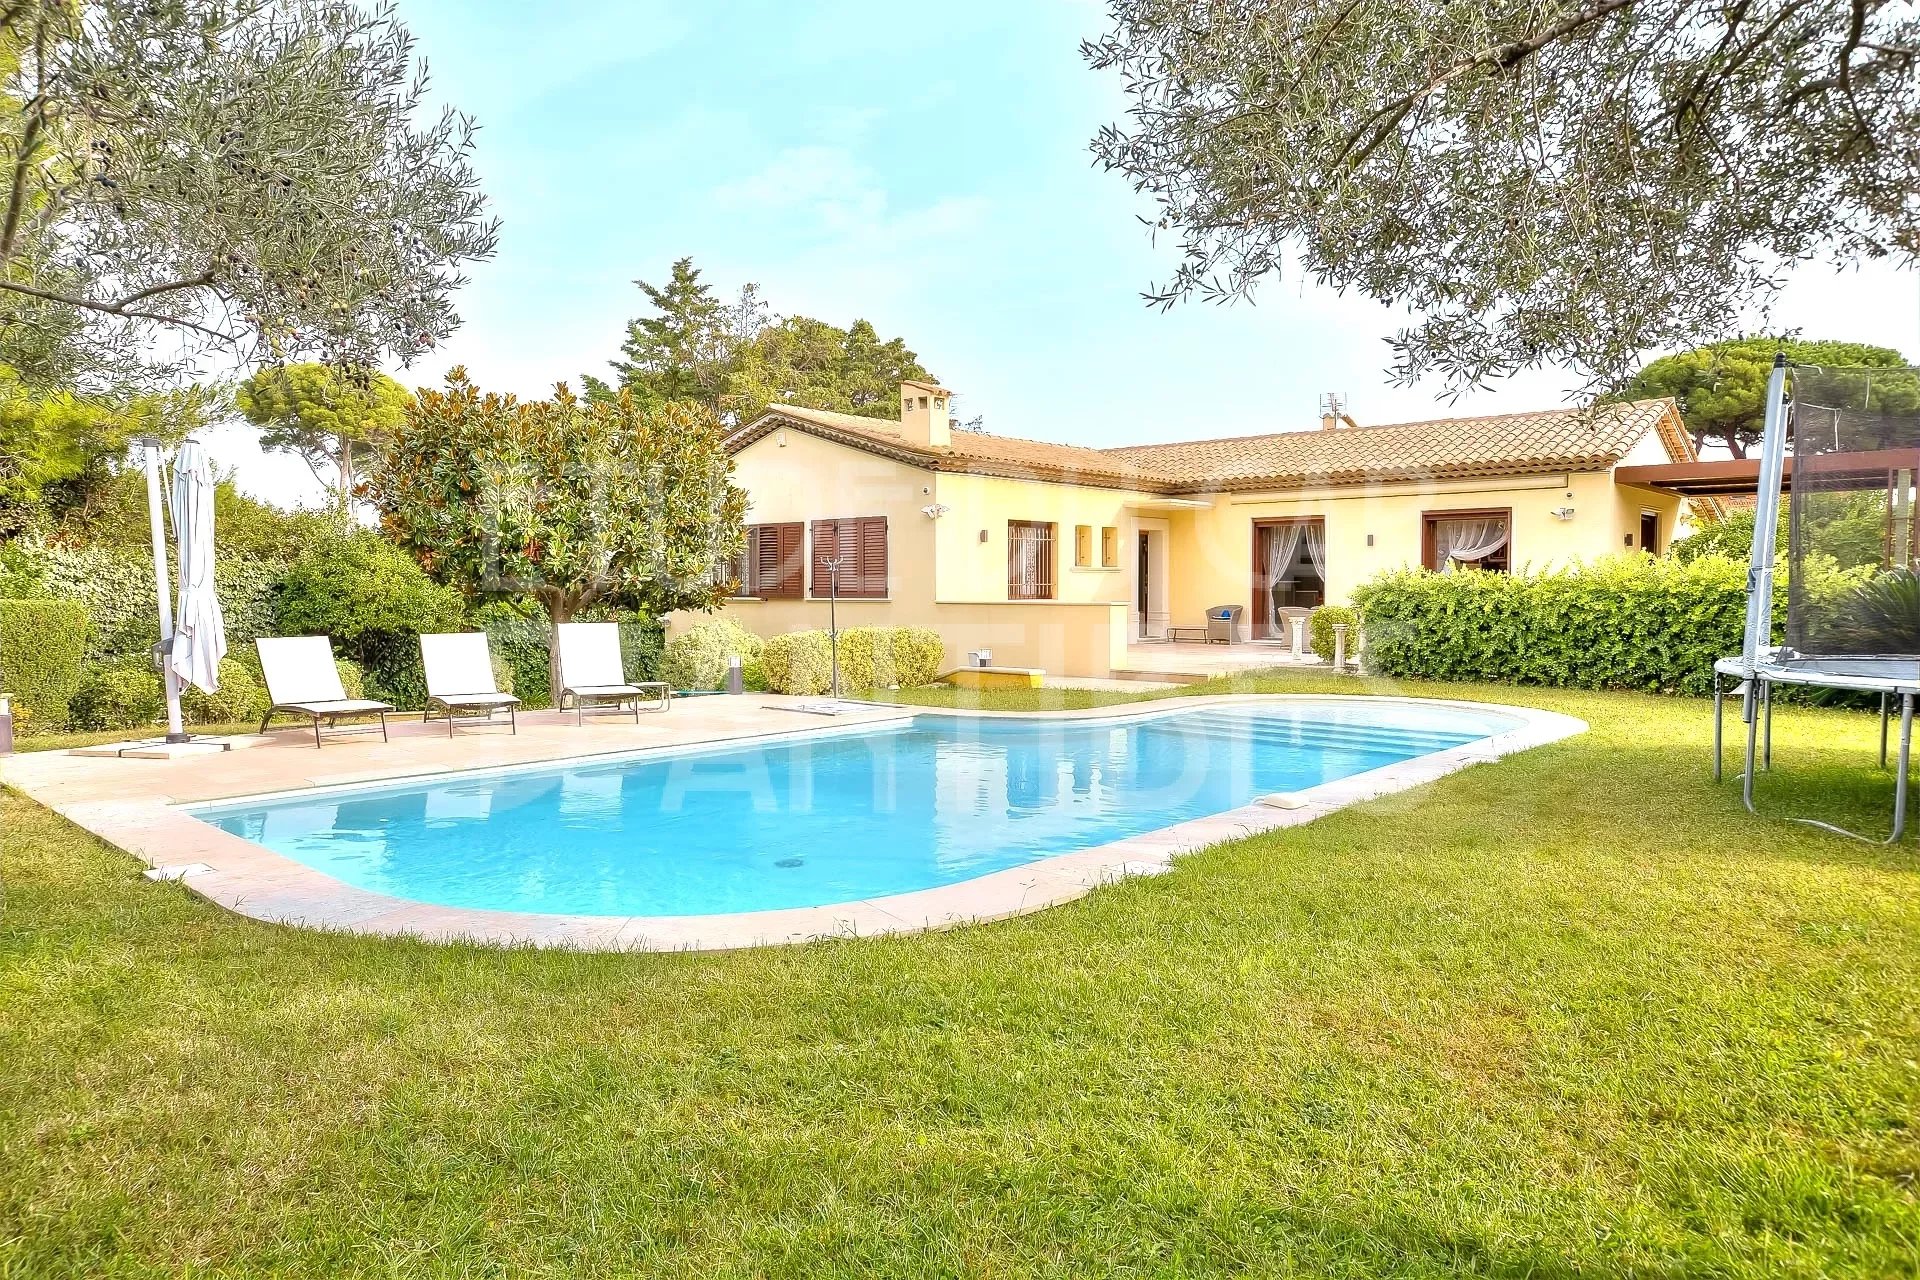 For Sale Villa Cap d'Antibes Ilette close to the sea